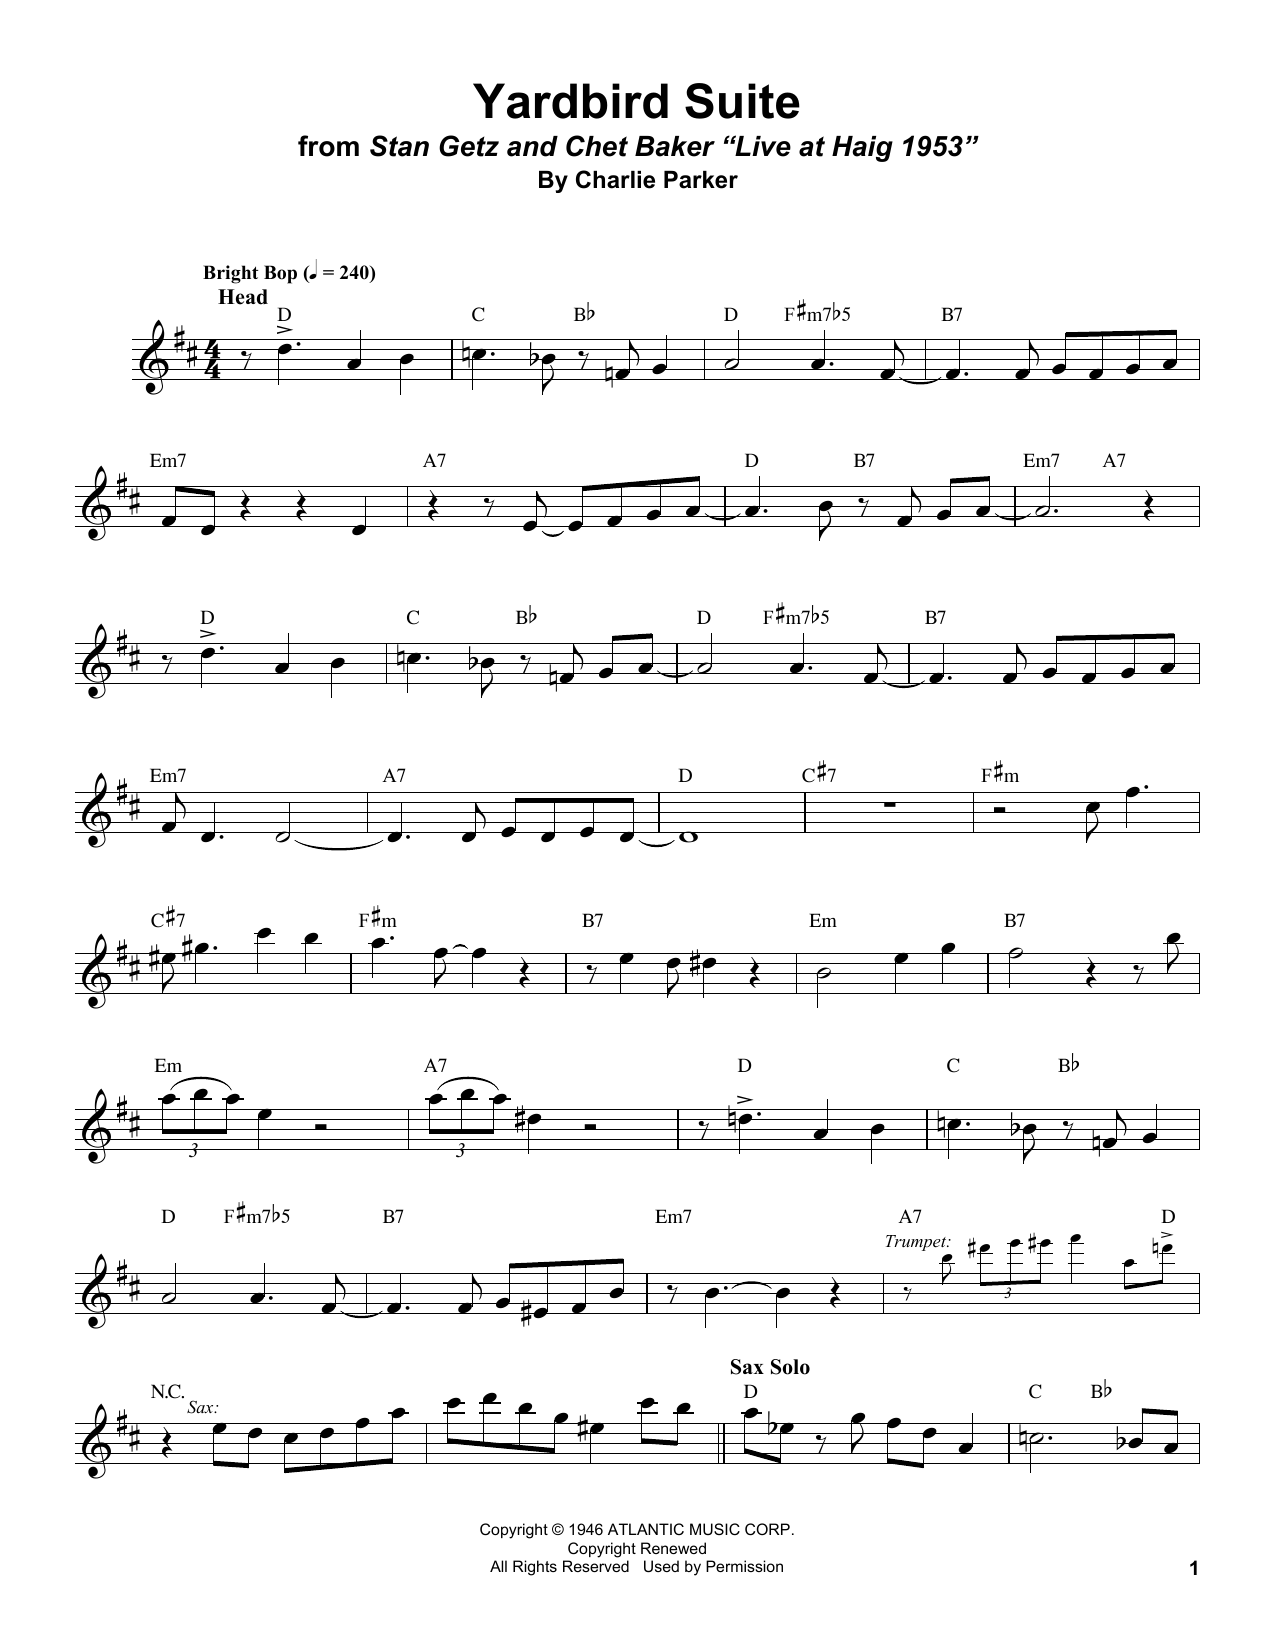 Stan Getz Yardbird Suite Sheet Music Notes & Chords for Tenor Sax Transcription - Download or Print PDF